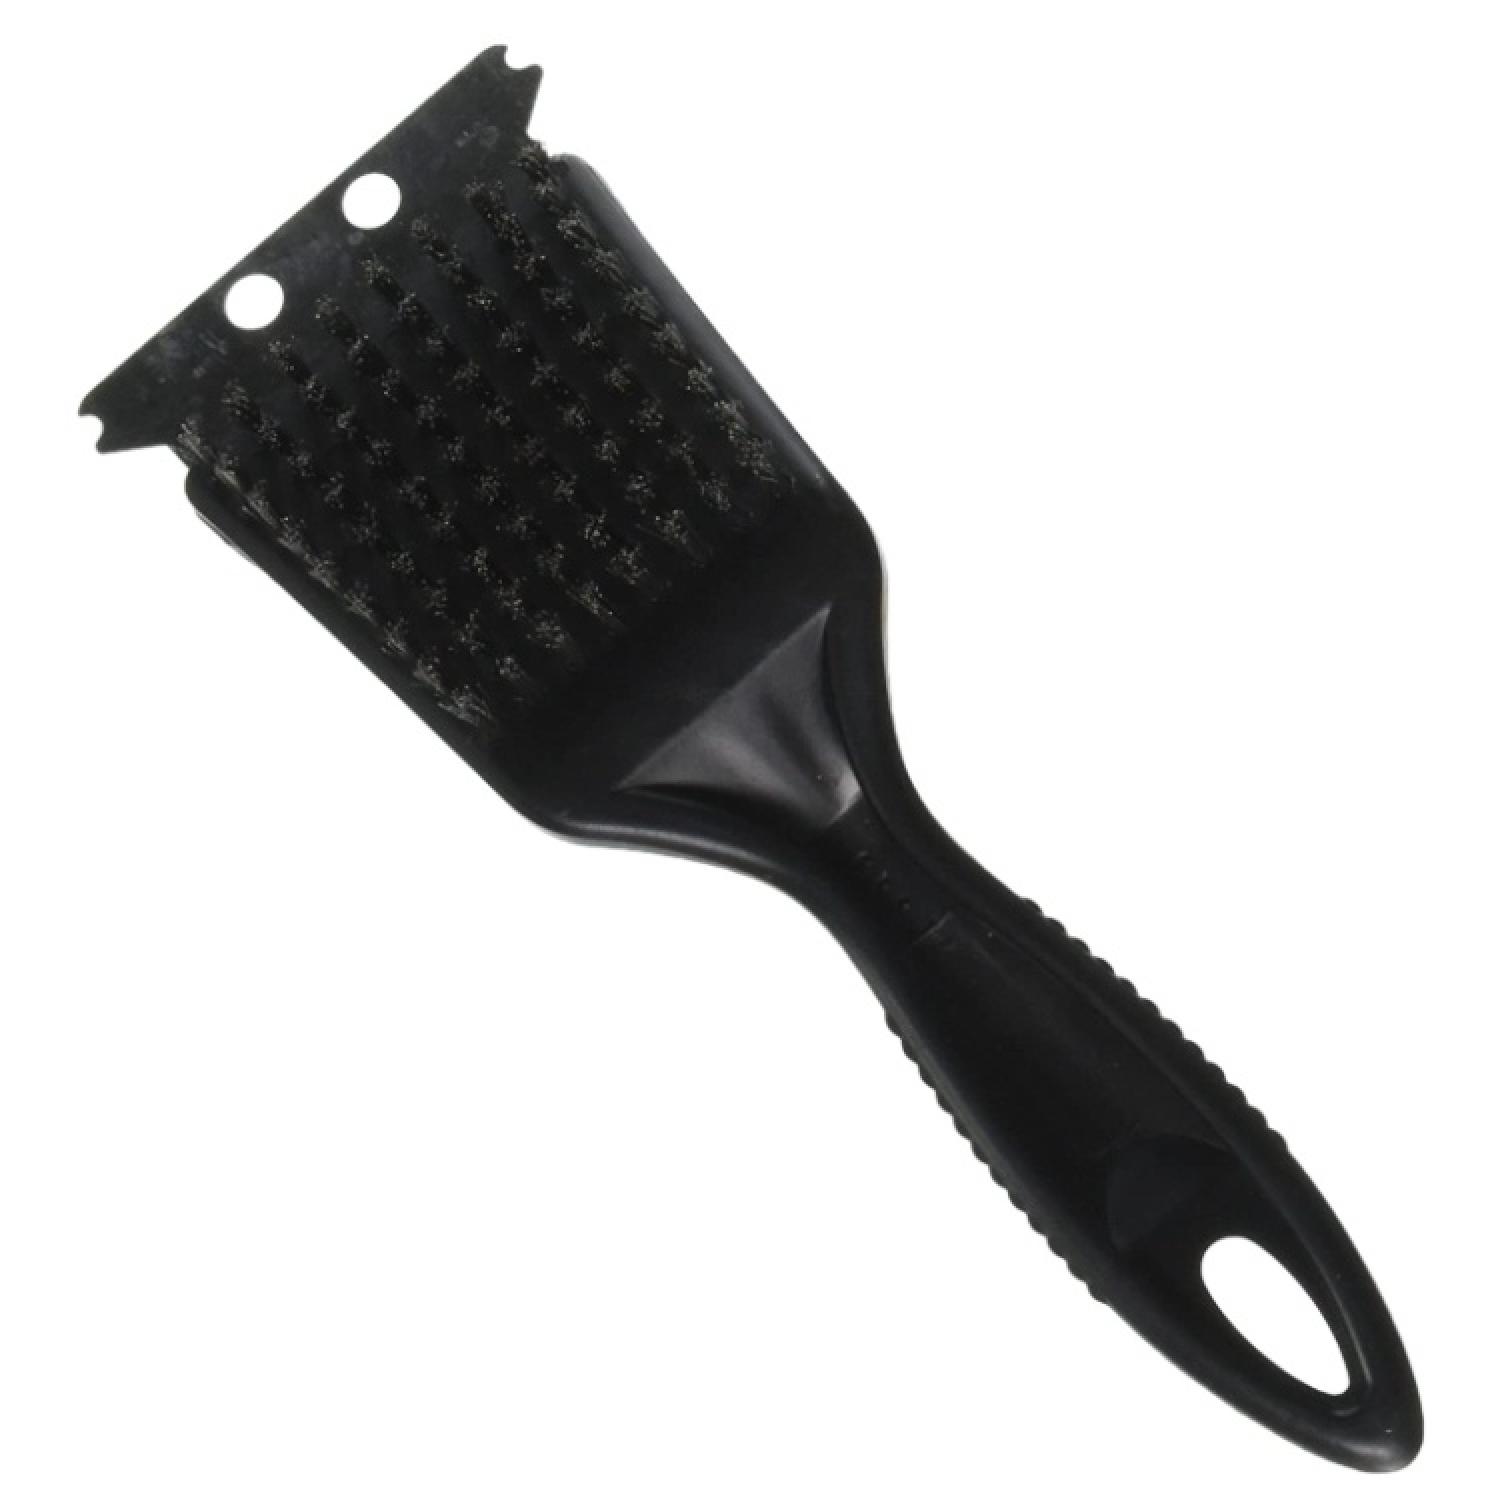 Toolbasix Plastic Handle Grill Brush 8-Inch